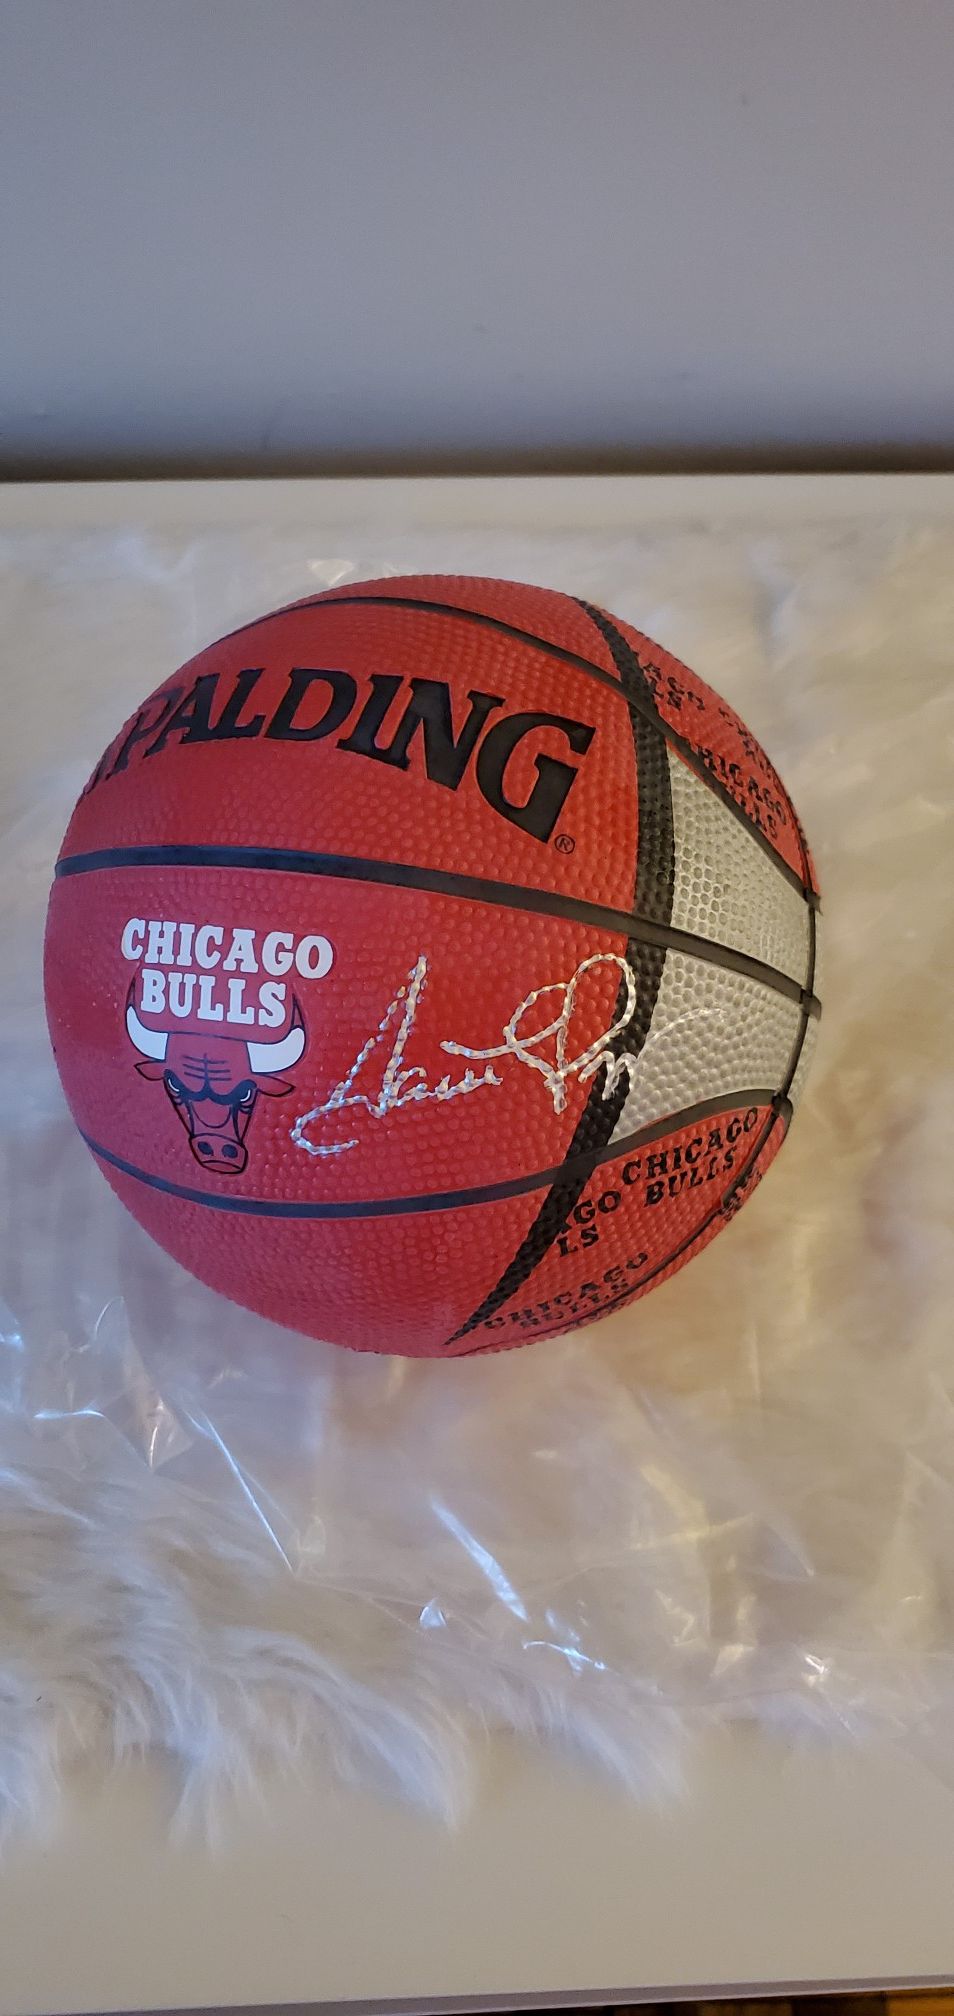 Scottie Pippen Autographed Mini Basketball with COA